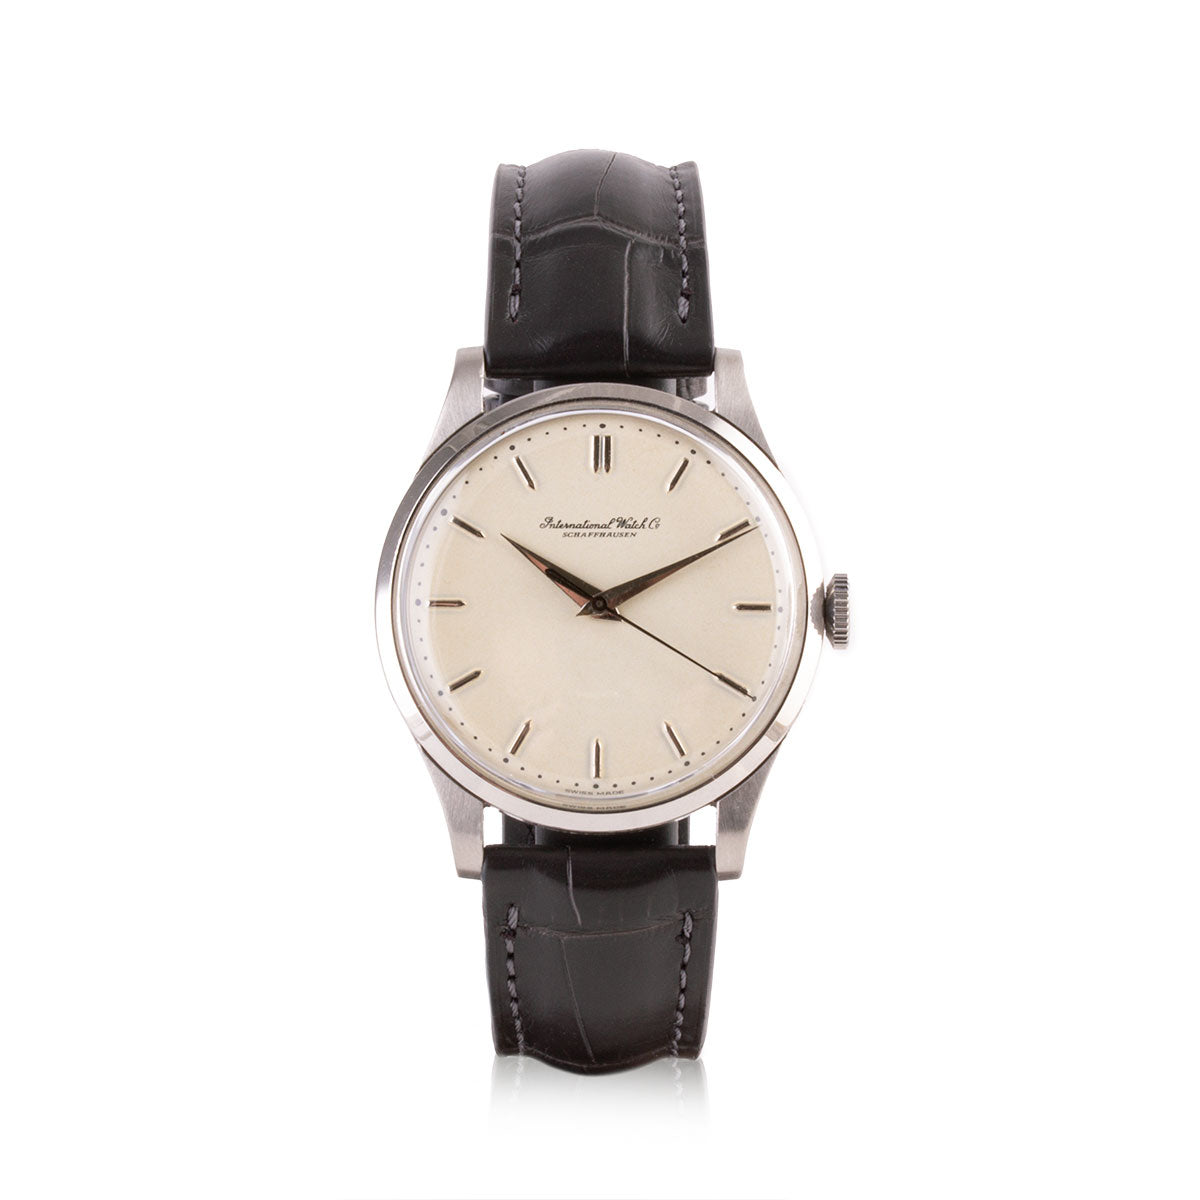 Second-hand watch - IWC - 2150€